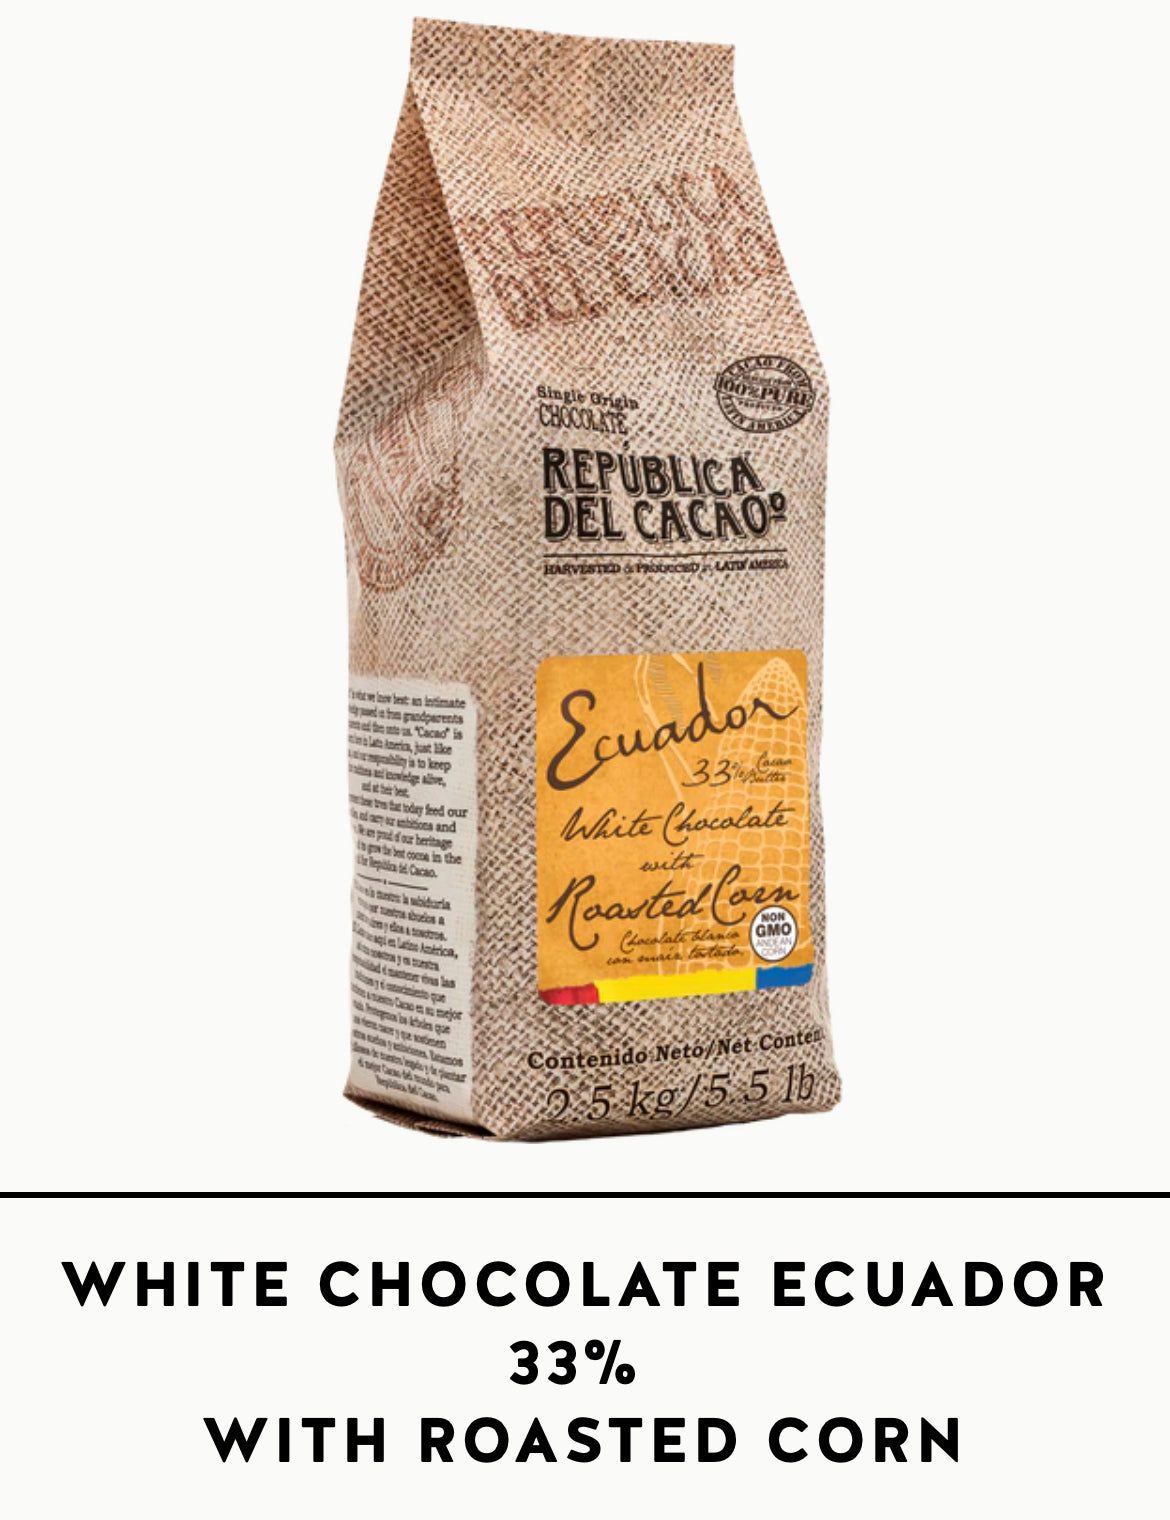 WHITE CHOCOLATE ECUADOR 33% WITH ROASTED CORN